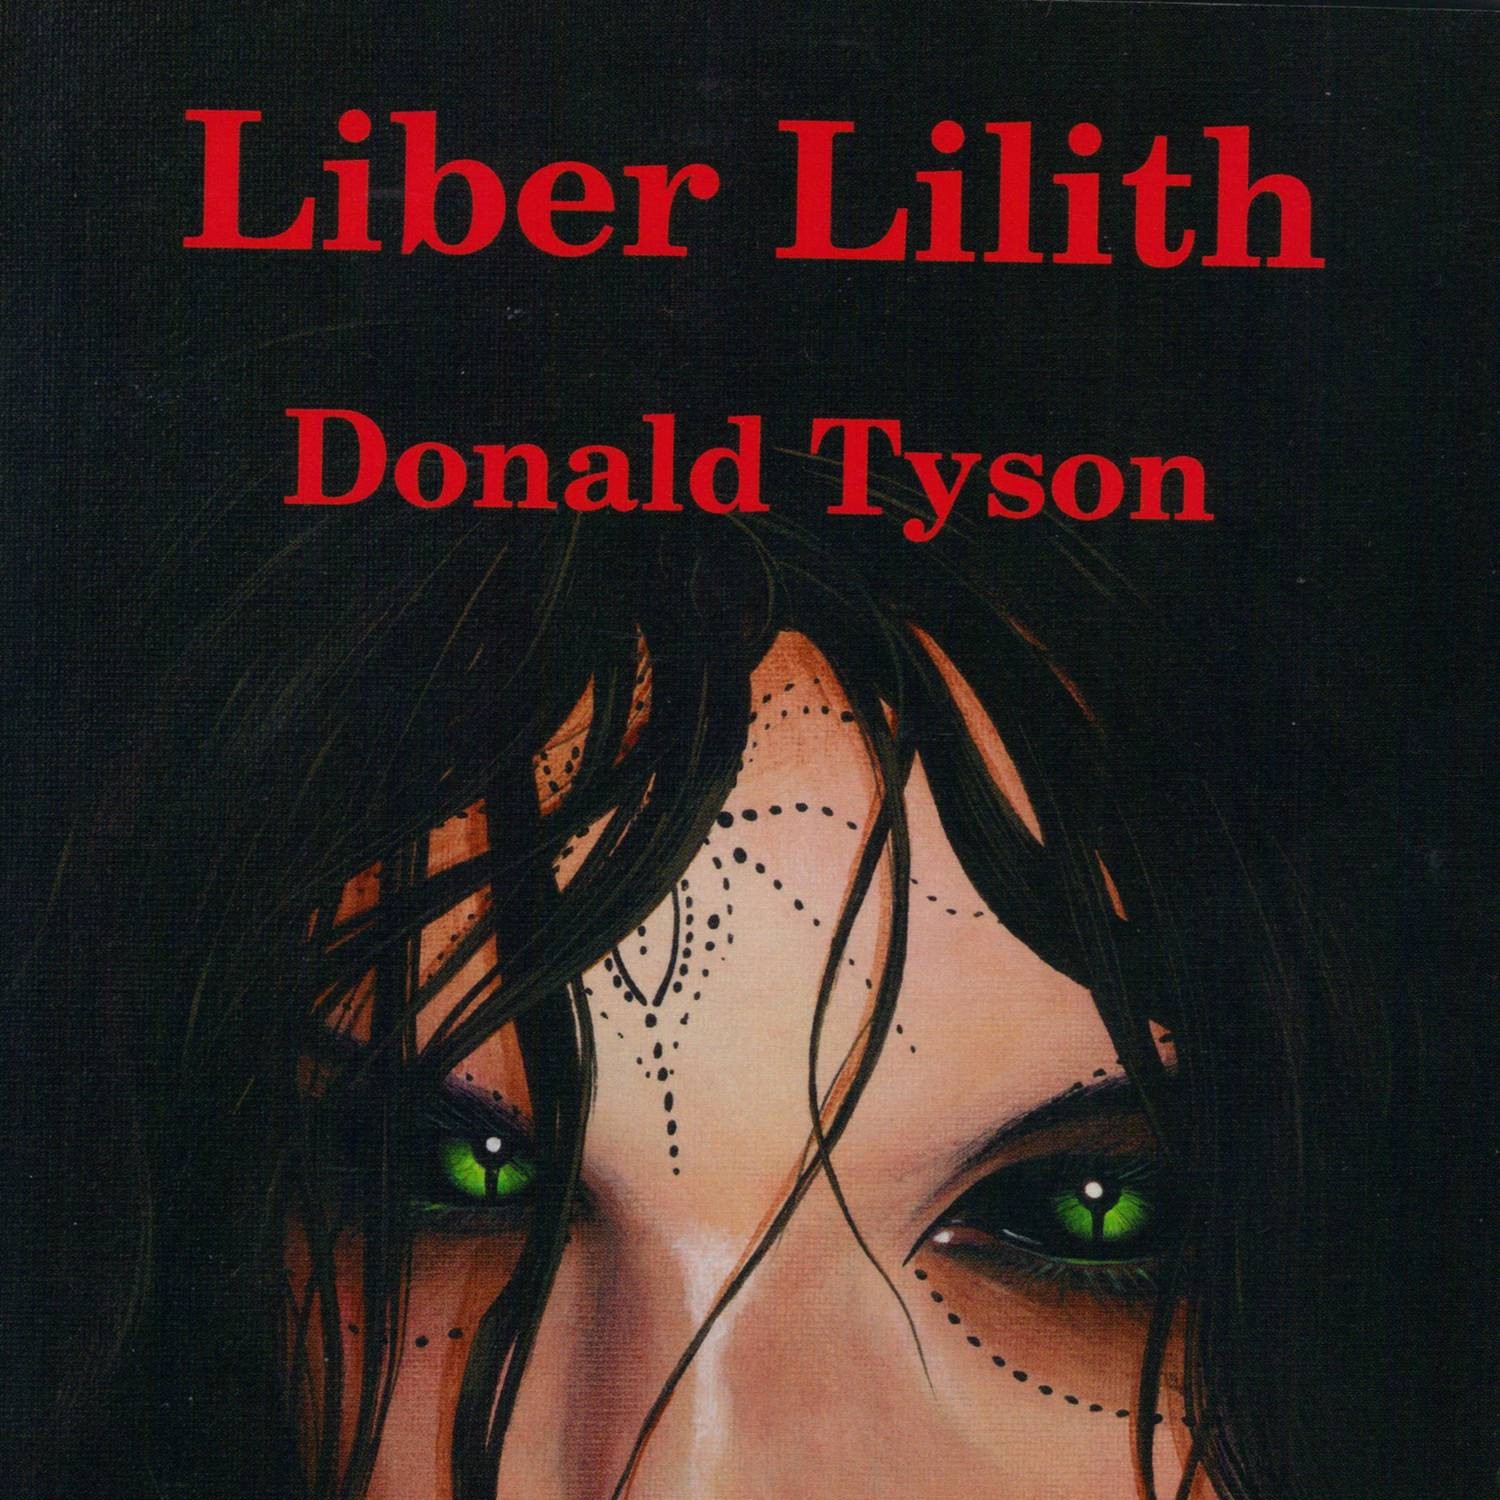 liber lilith donald tyson 2nd edition